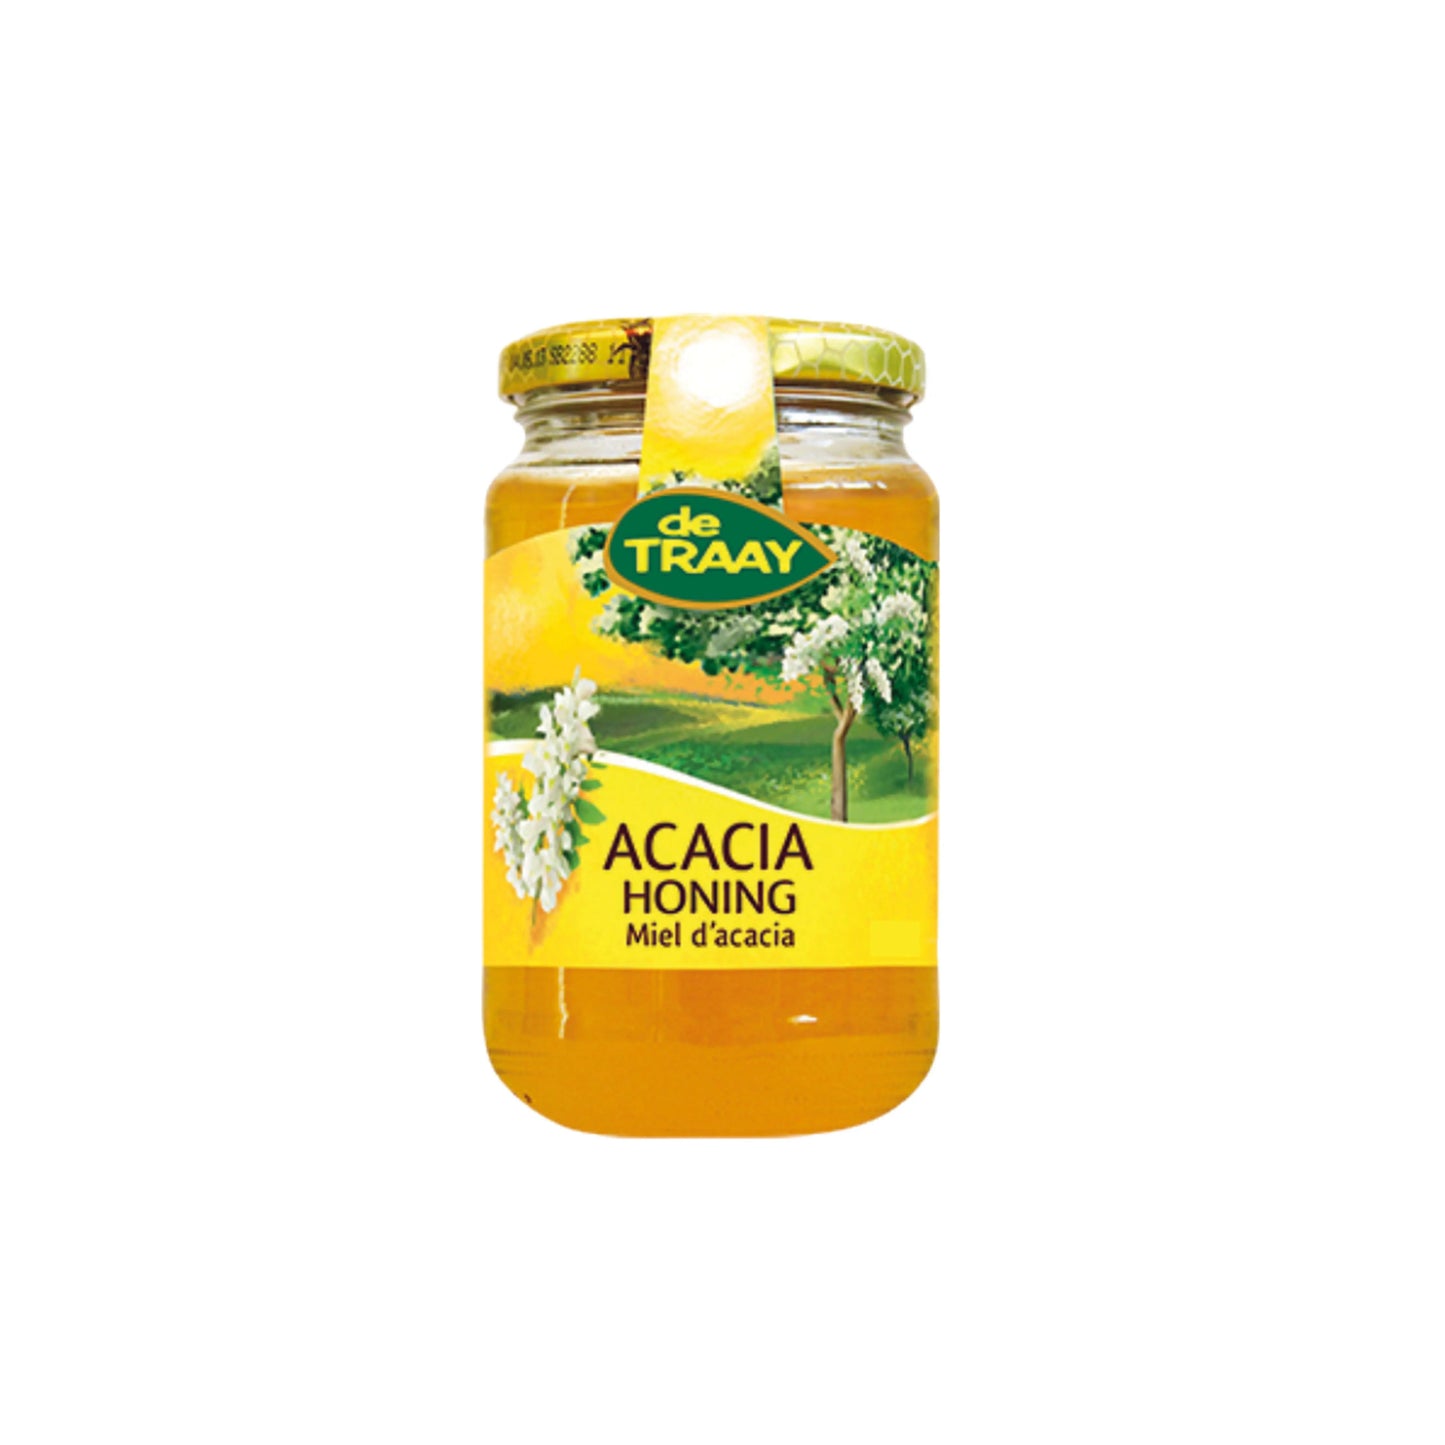 Acaciahoning gangbare honing 350g de Traay (vloeibaar) - Honingwinkel